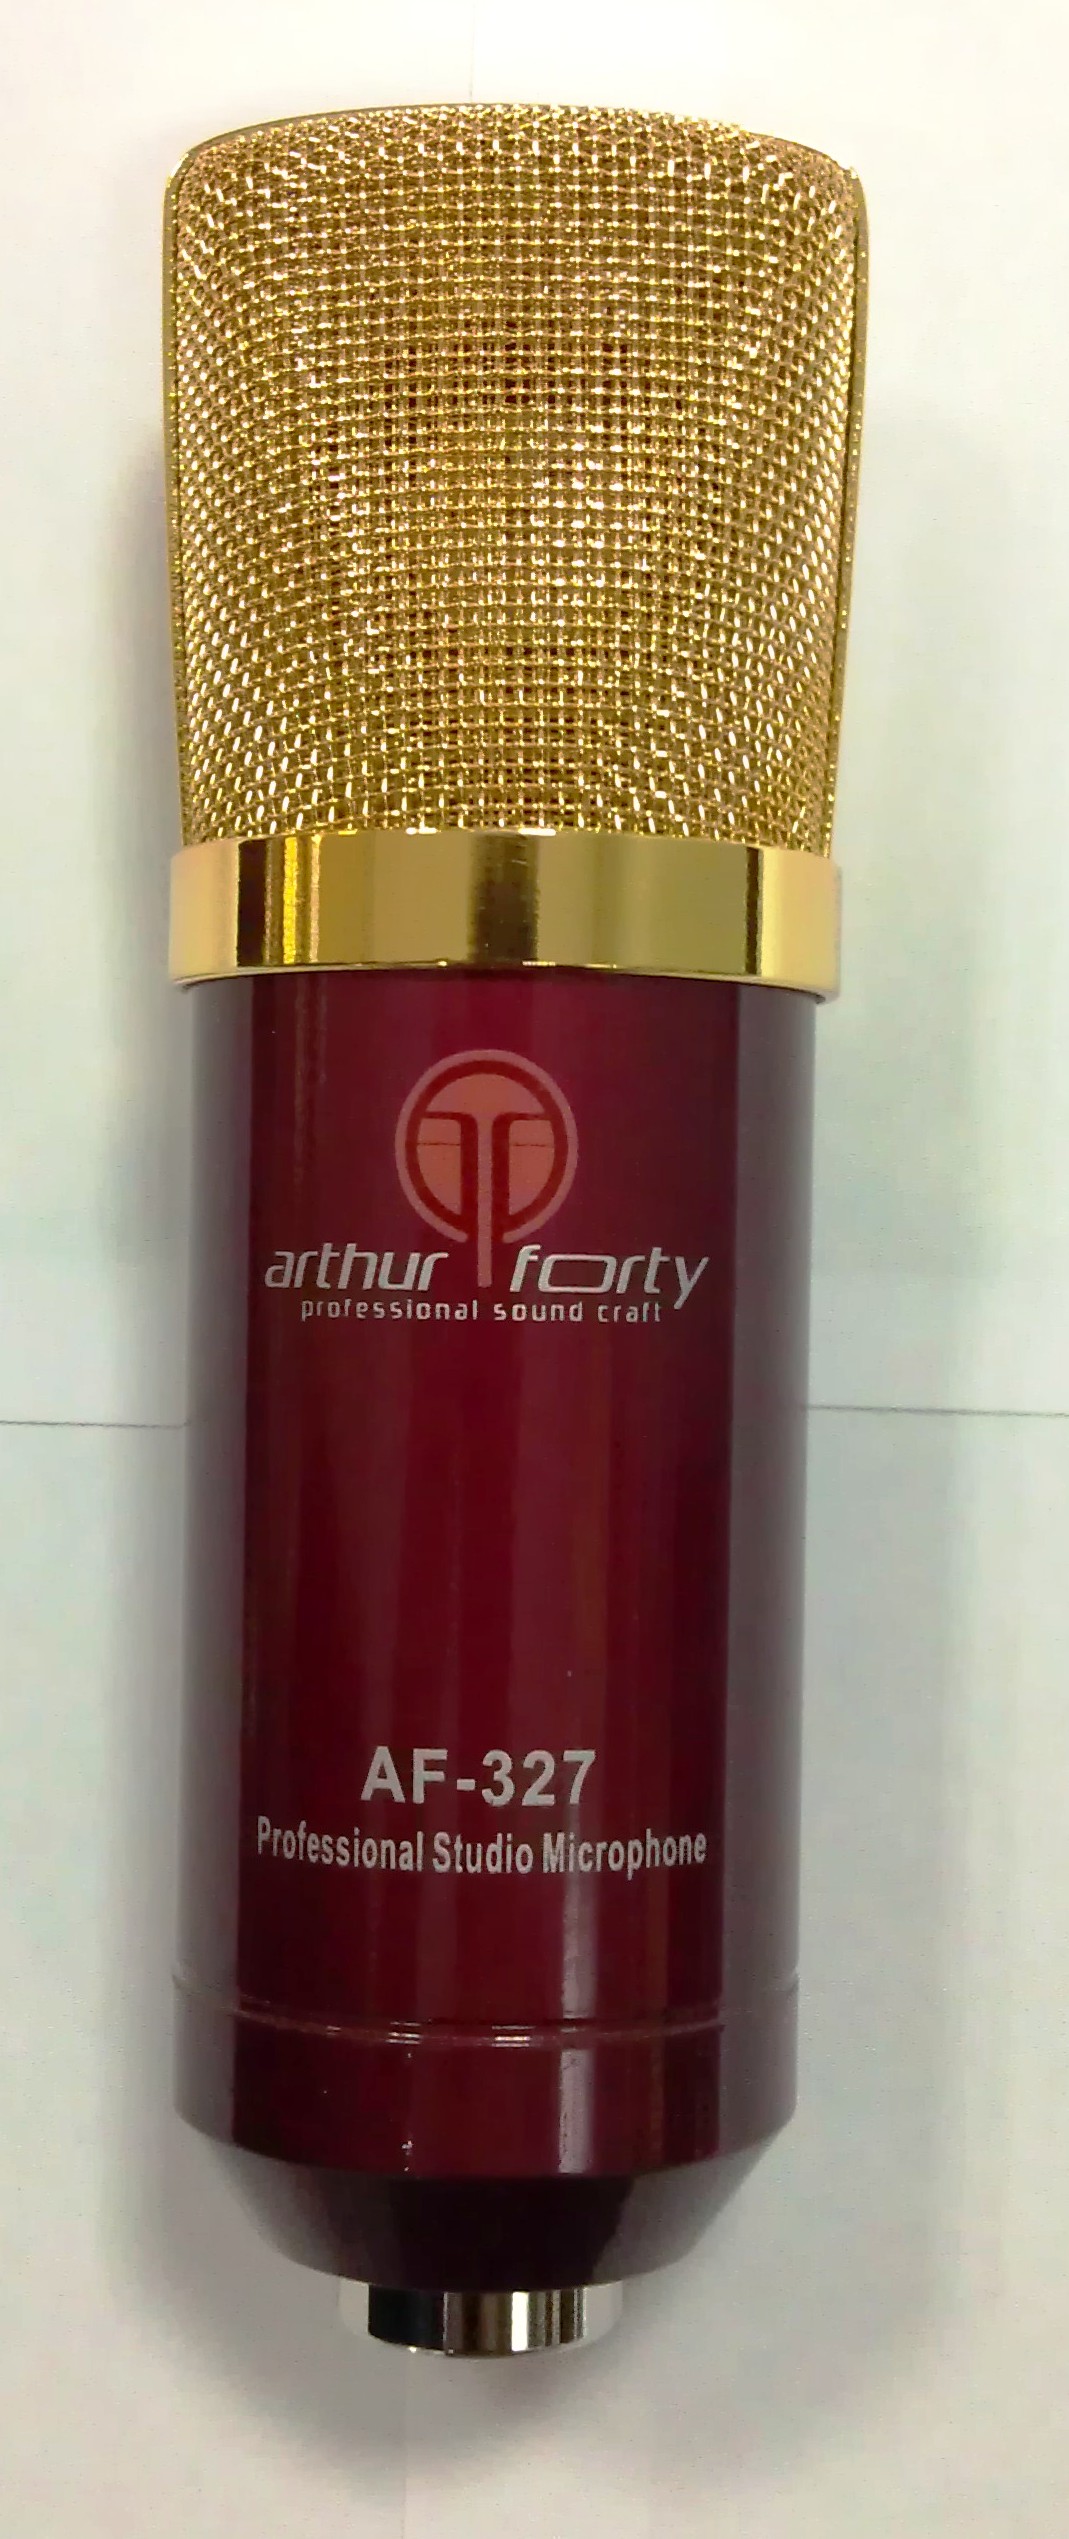 Студийные микрофоны Arthur Forty AF-327 PSC (красный) king arthur knight s tale supporter pack pc